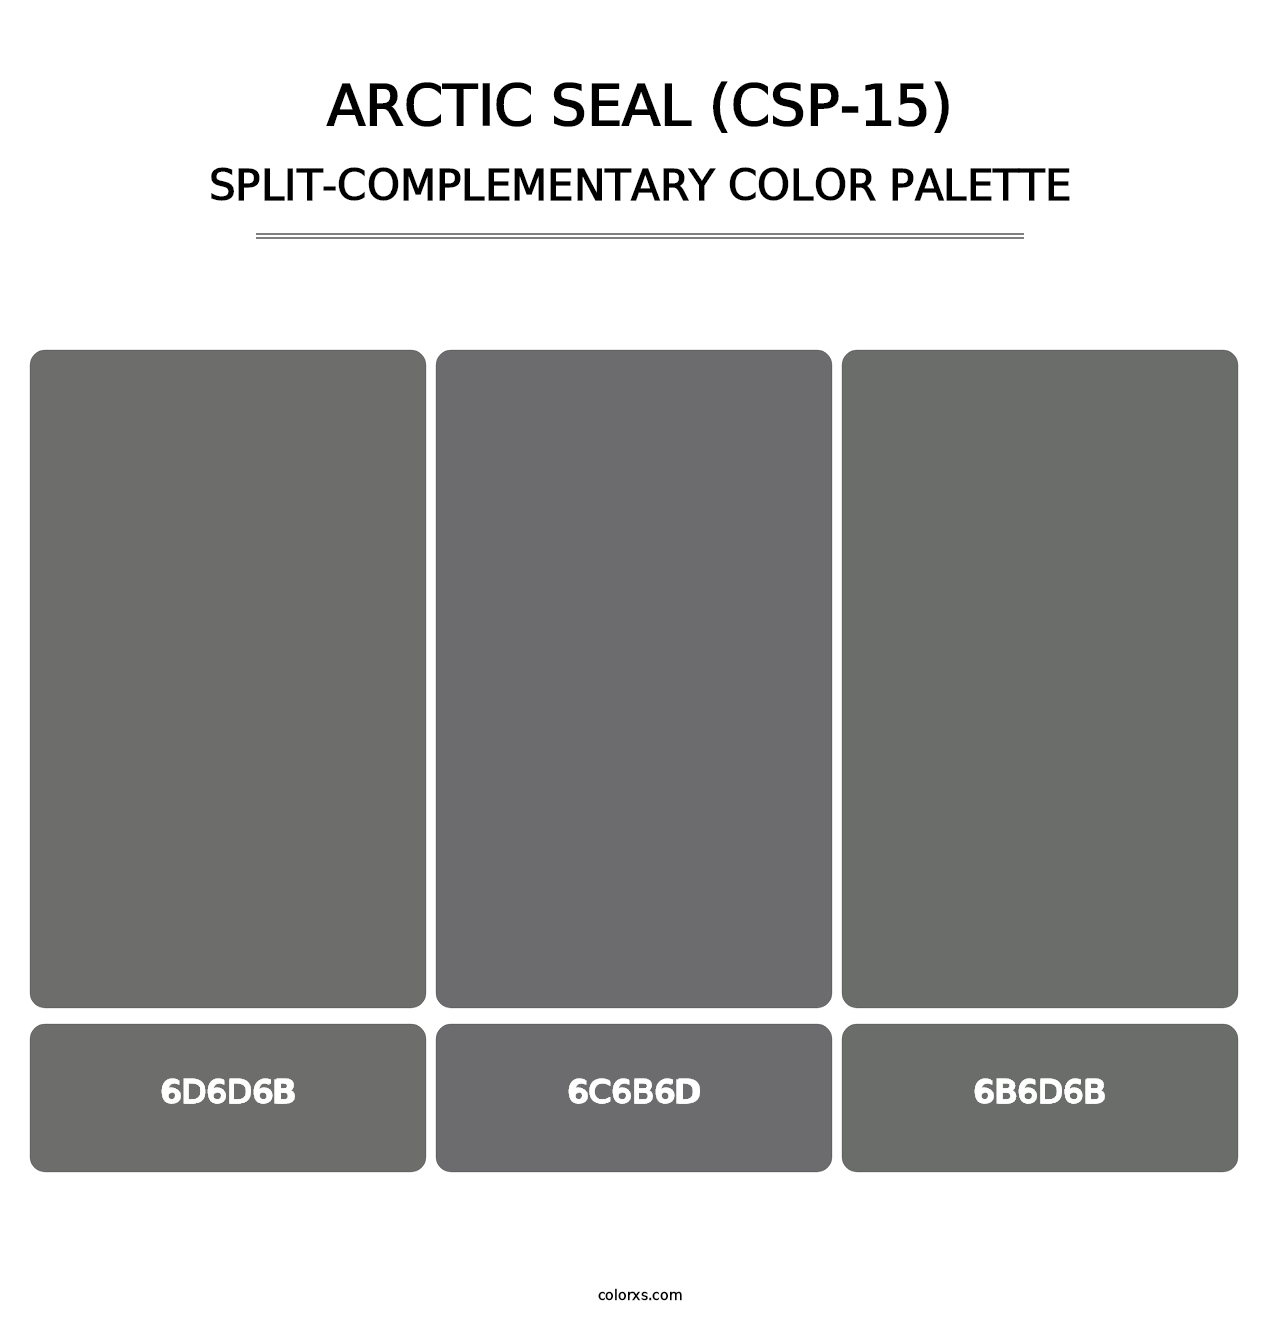 Arctic Seal (CSP-15) - Split-Complementary Color Palette